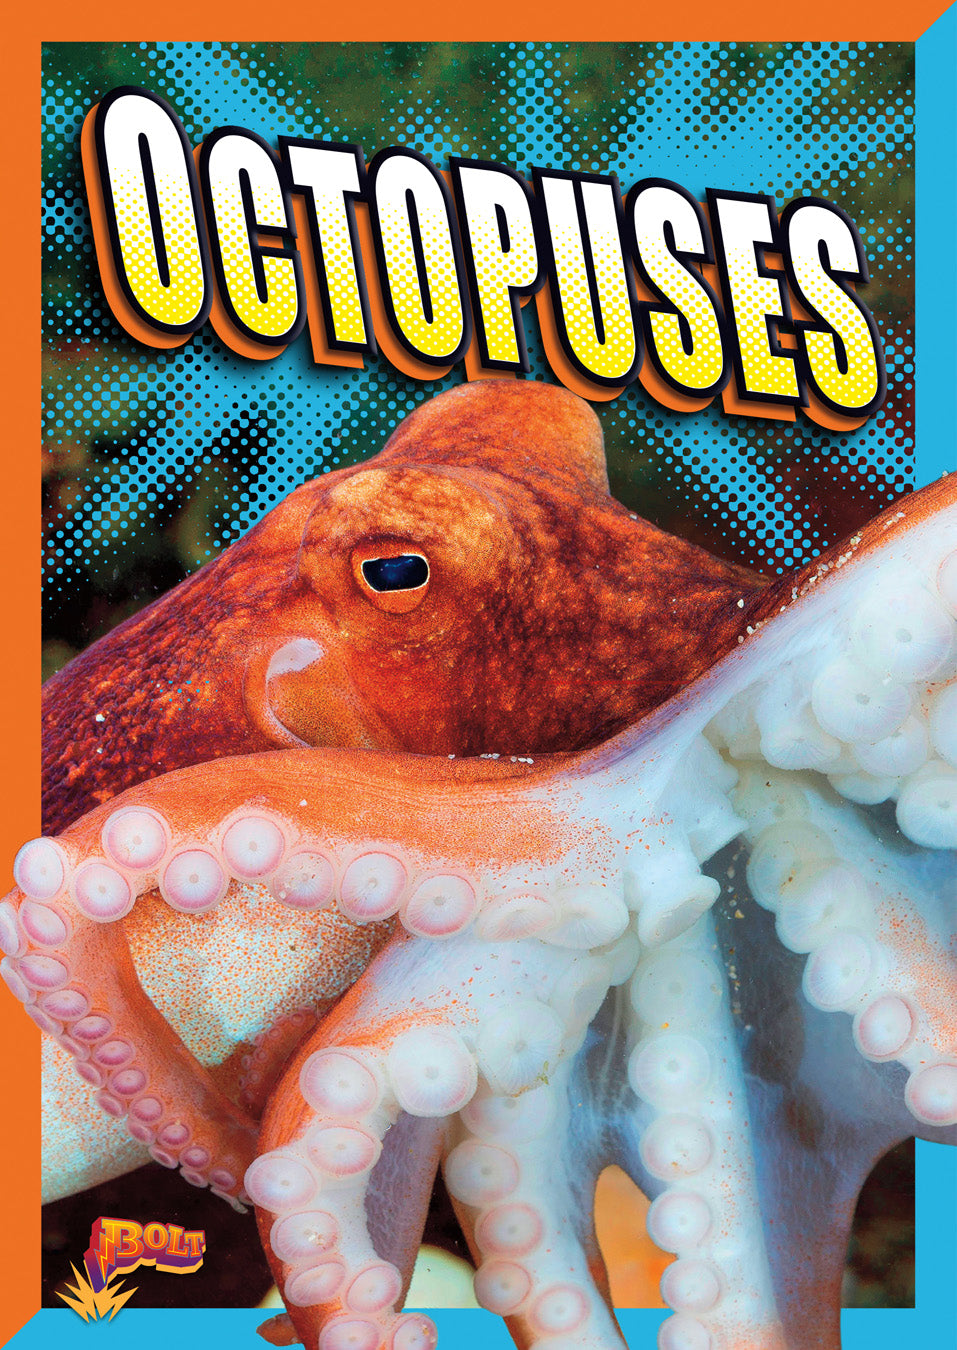 Super Sea Creatures: Octopuses